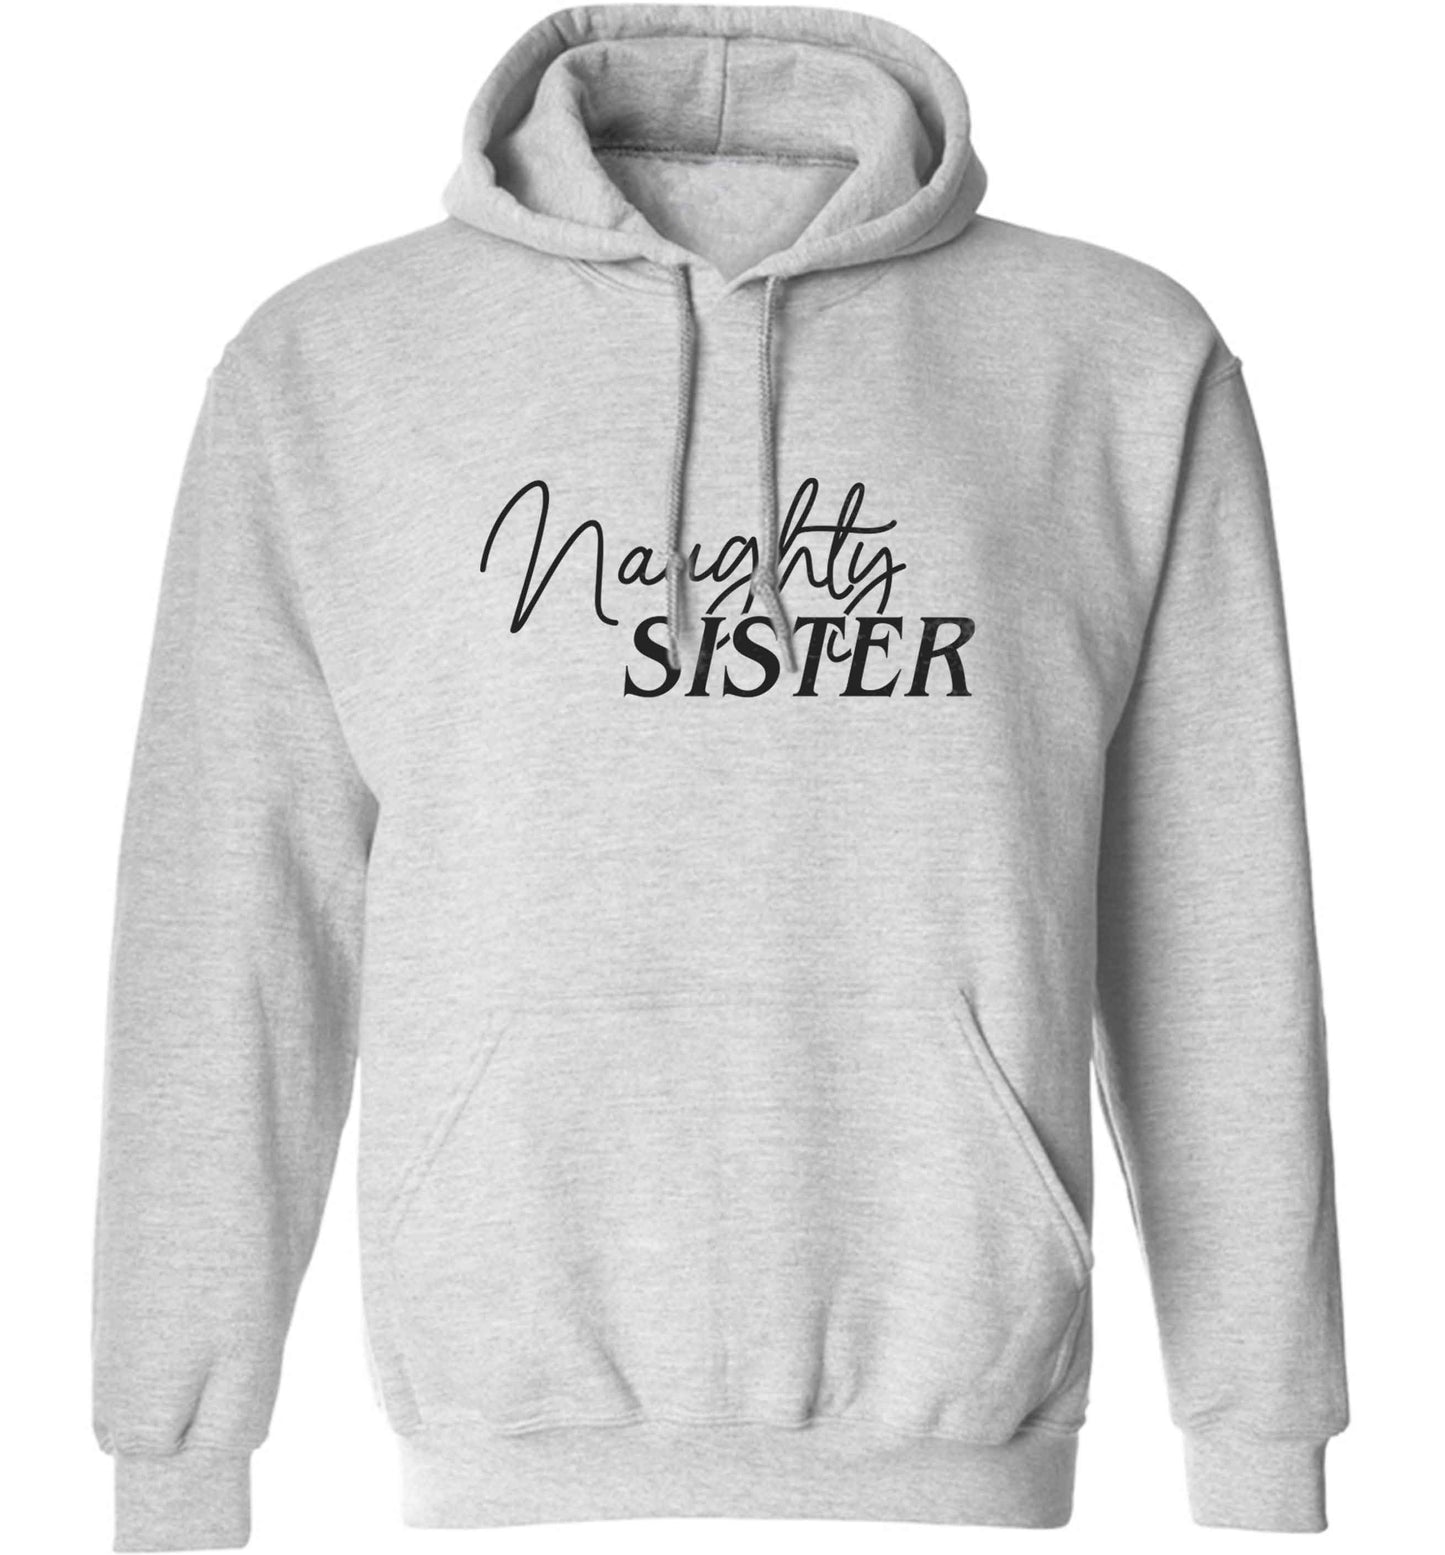 Naughty Sister adults unisex grey hoodie 2XL